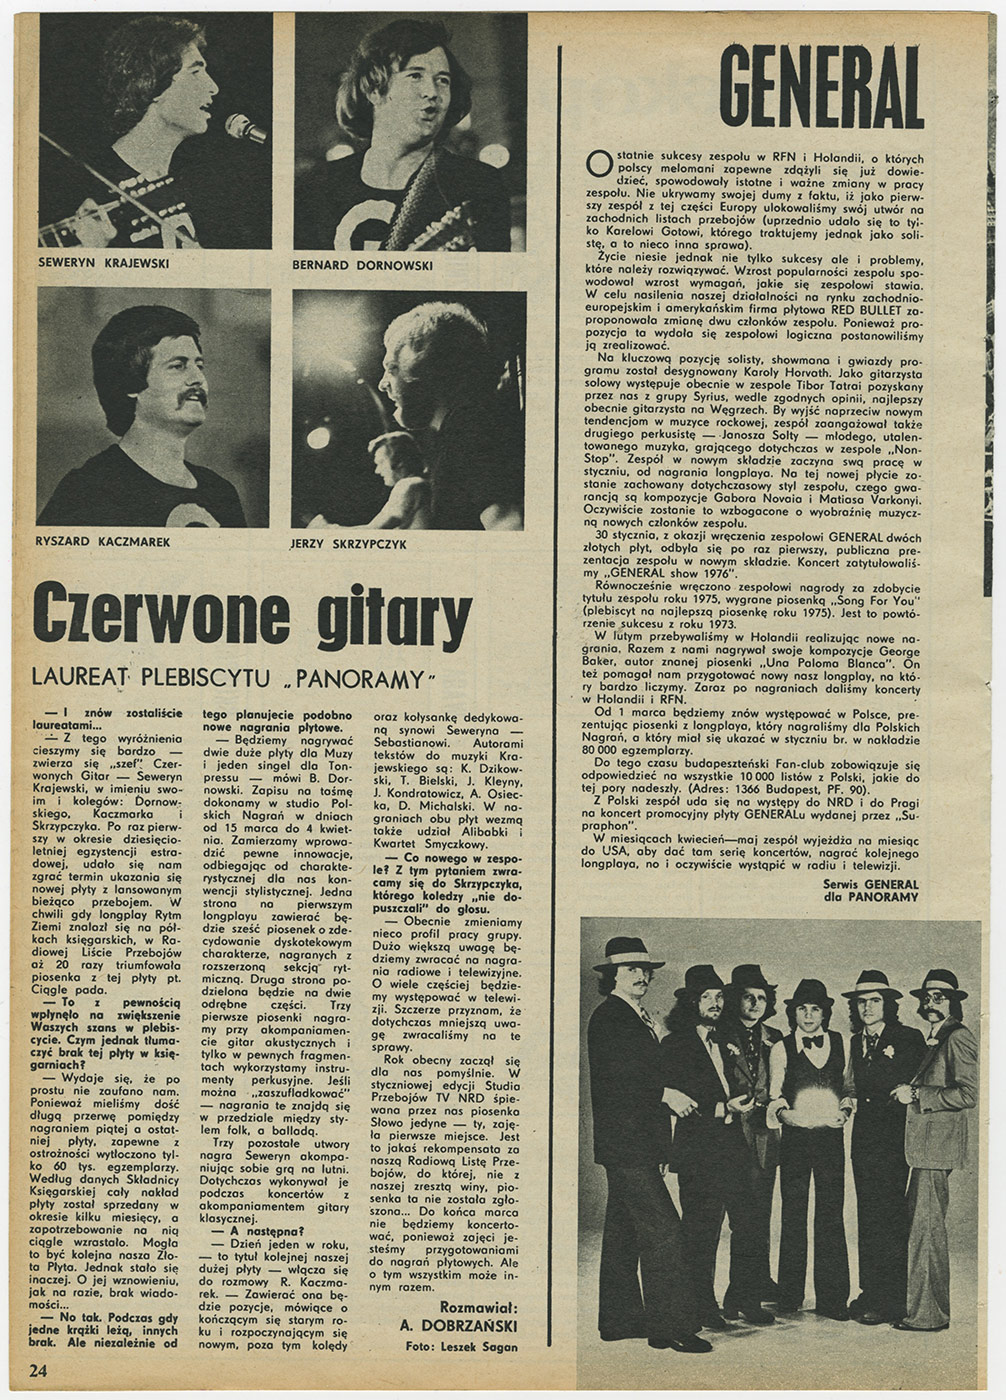 Czerwone gitary - laureat plebiscytu Panoramy. 7.03.1973 r.